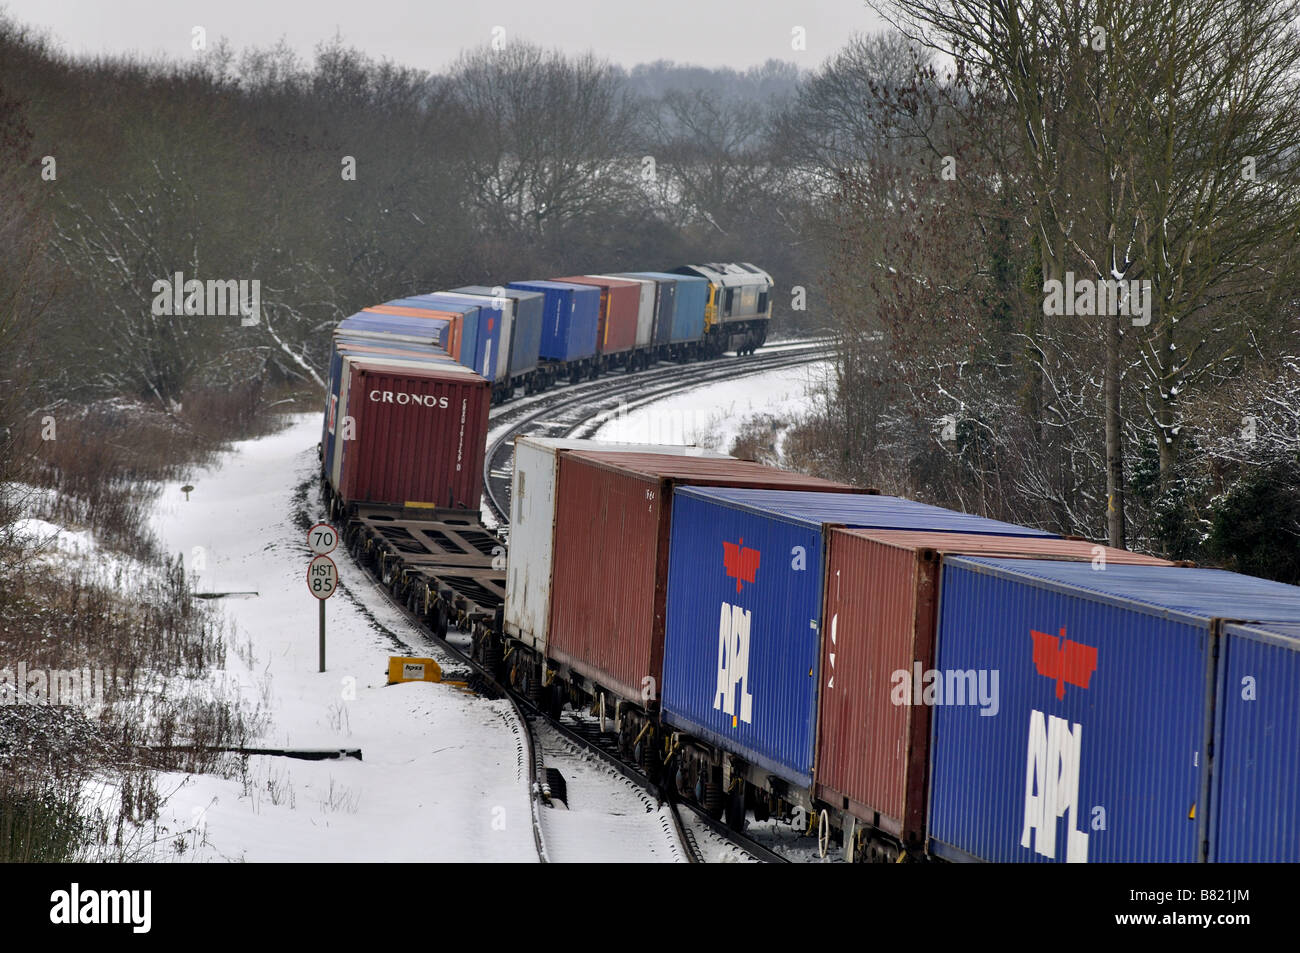 Freightliner train in snow, UK Stock Photo